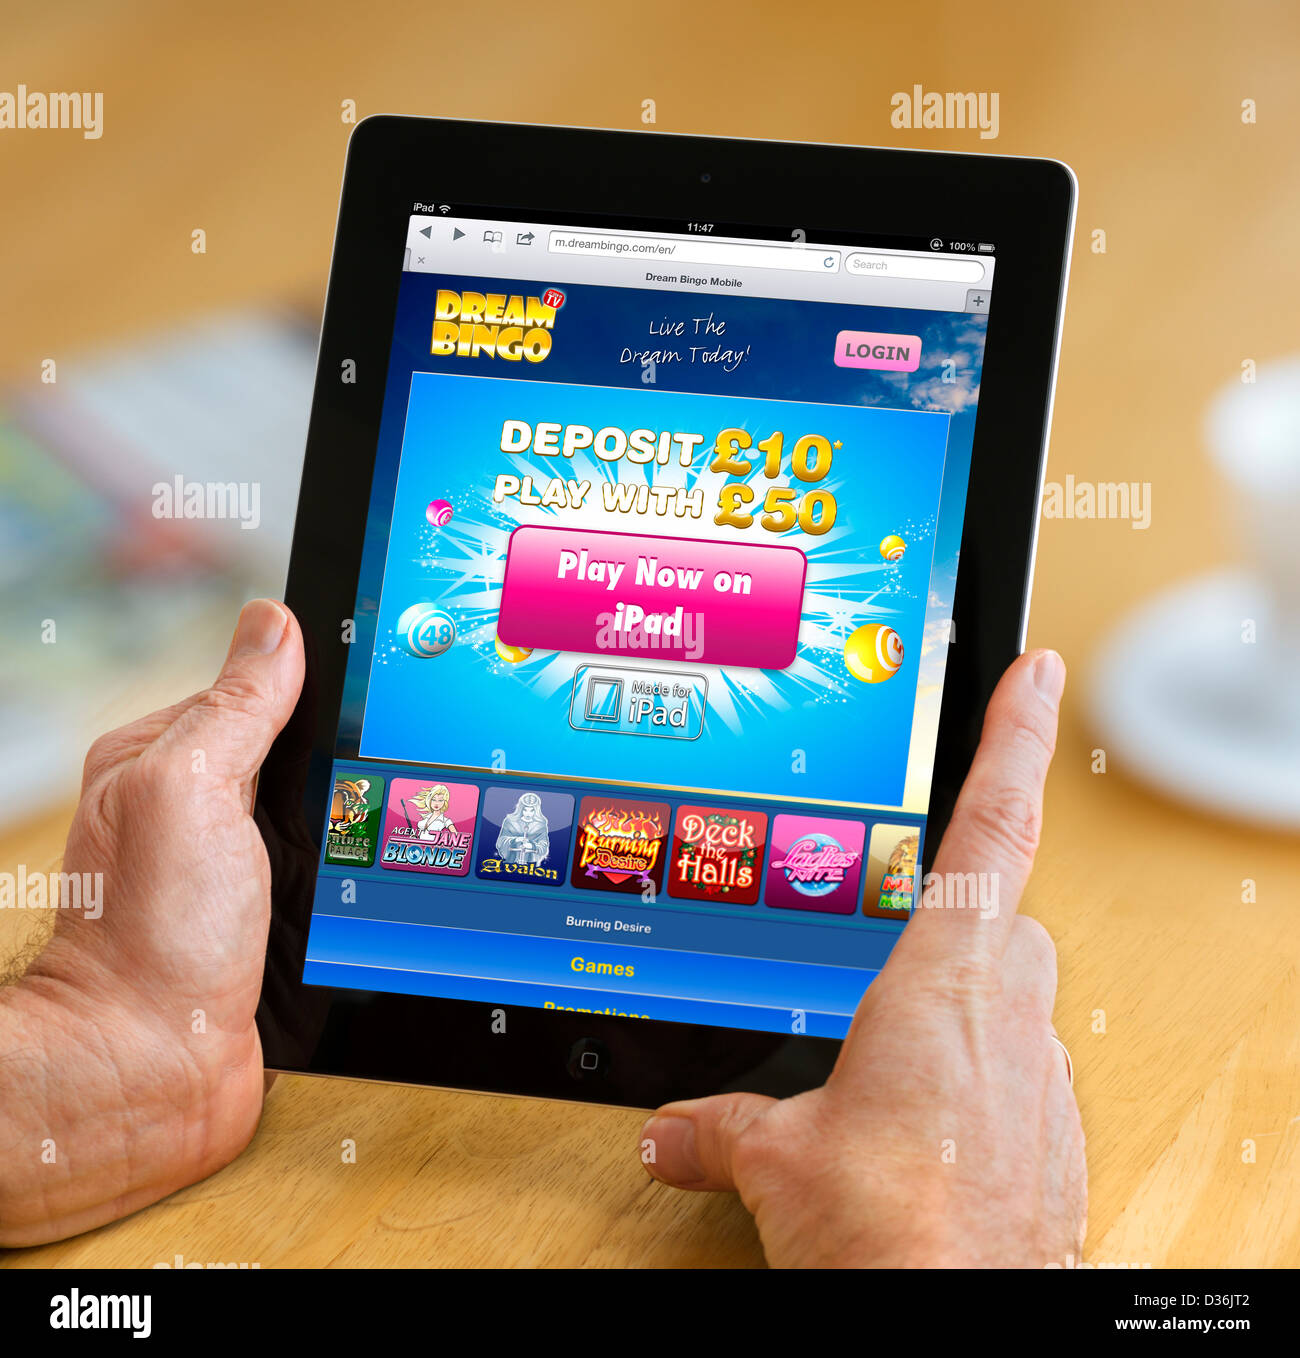 Playing Dream Bingo on a 4th generation Apple iPad, UK Stock Photo